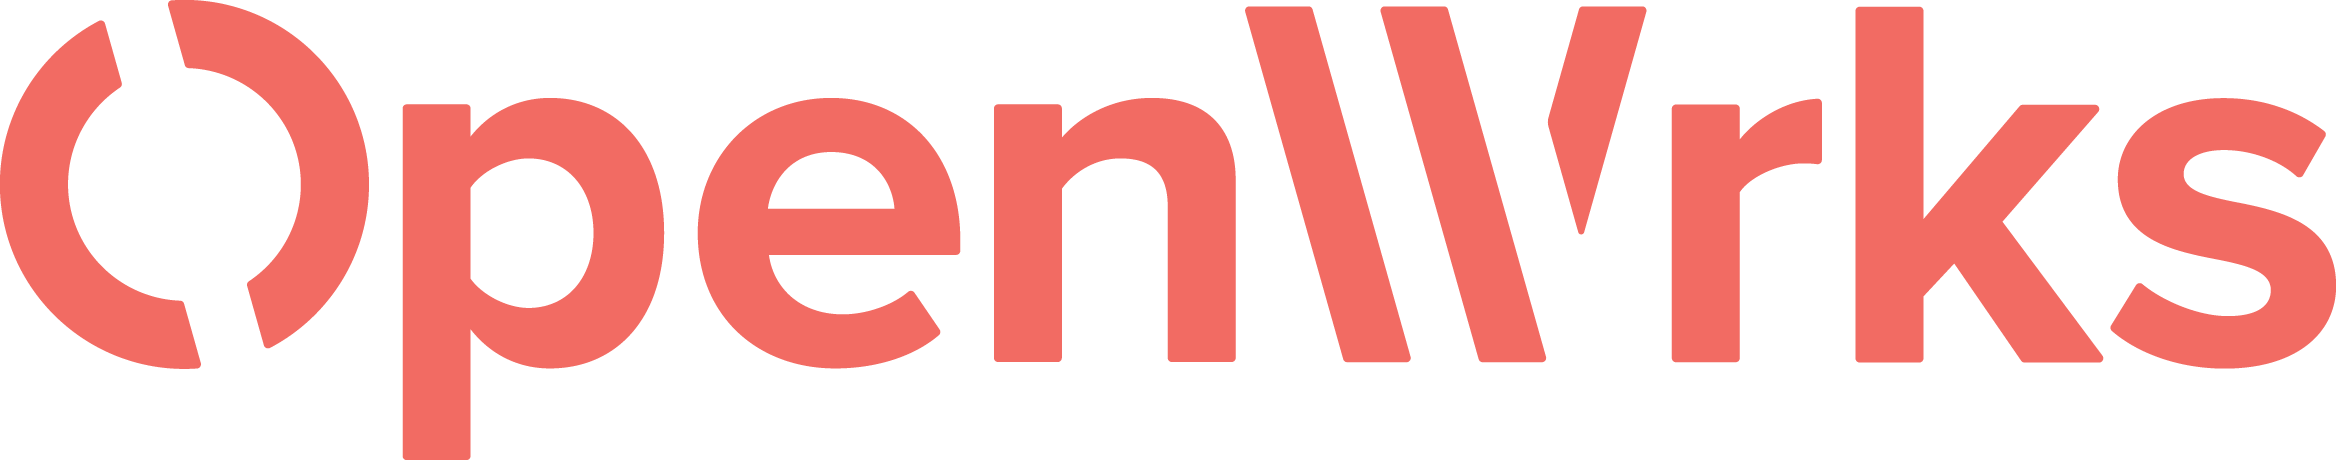 Openwrks Logo